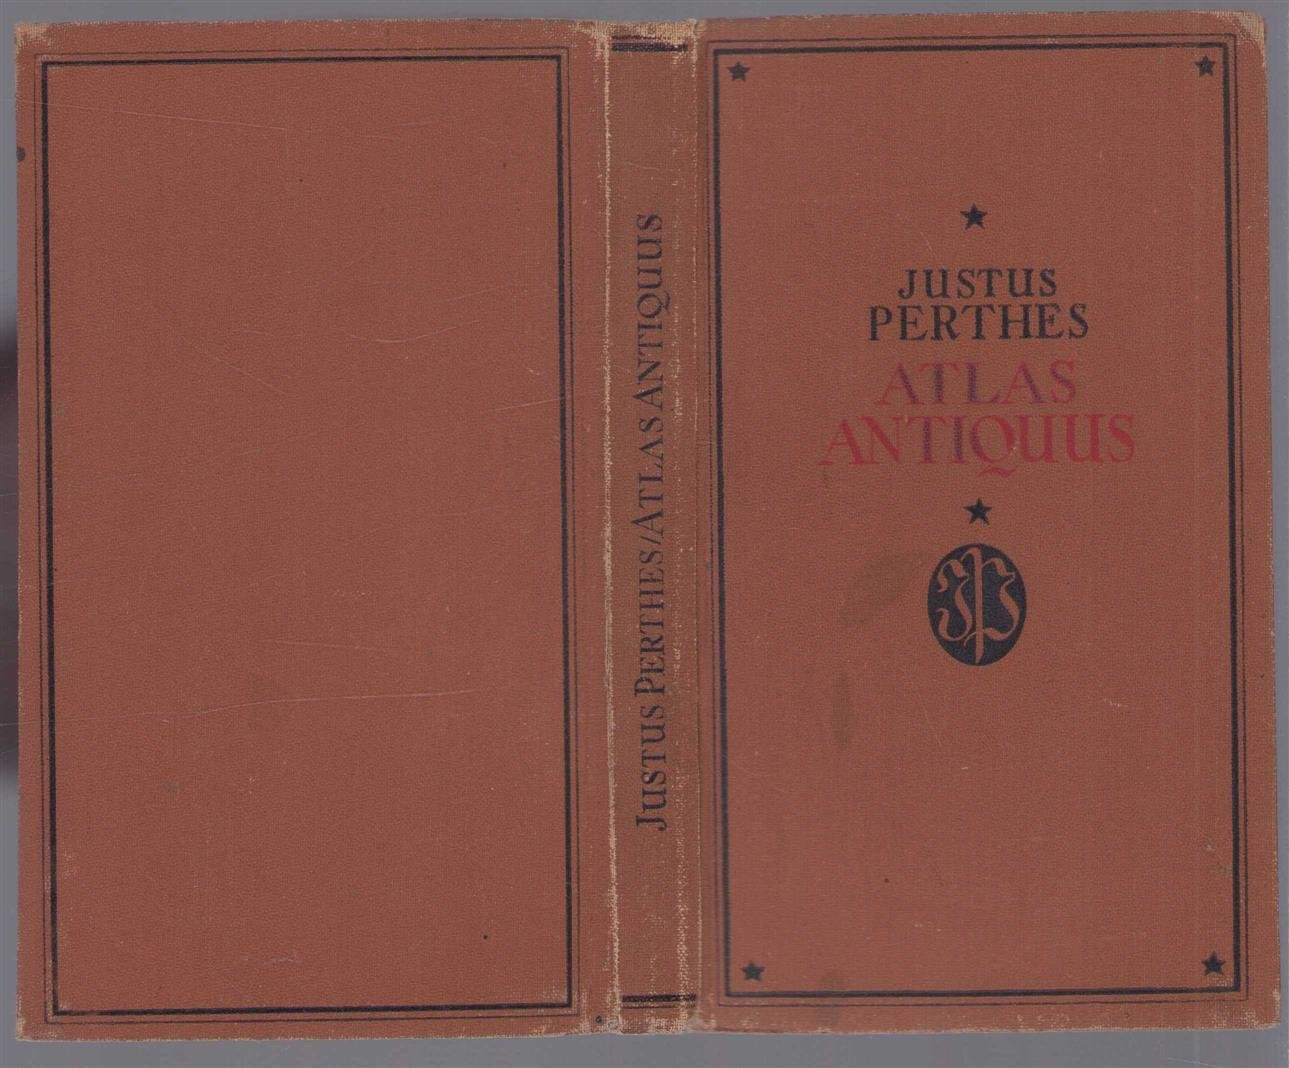 Justus Perthes - atlas antiques